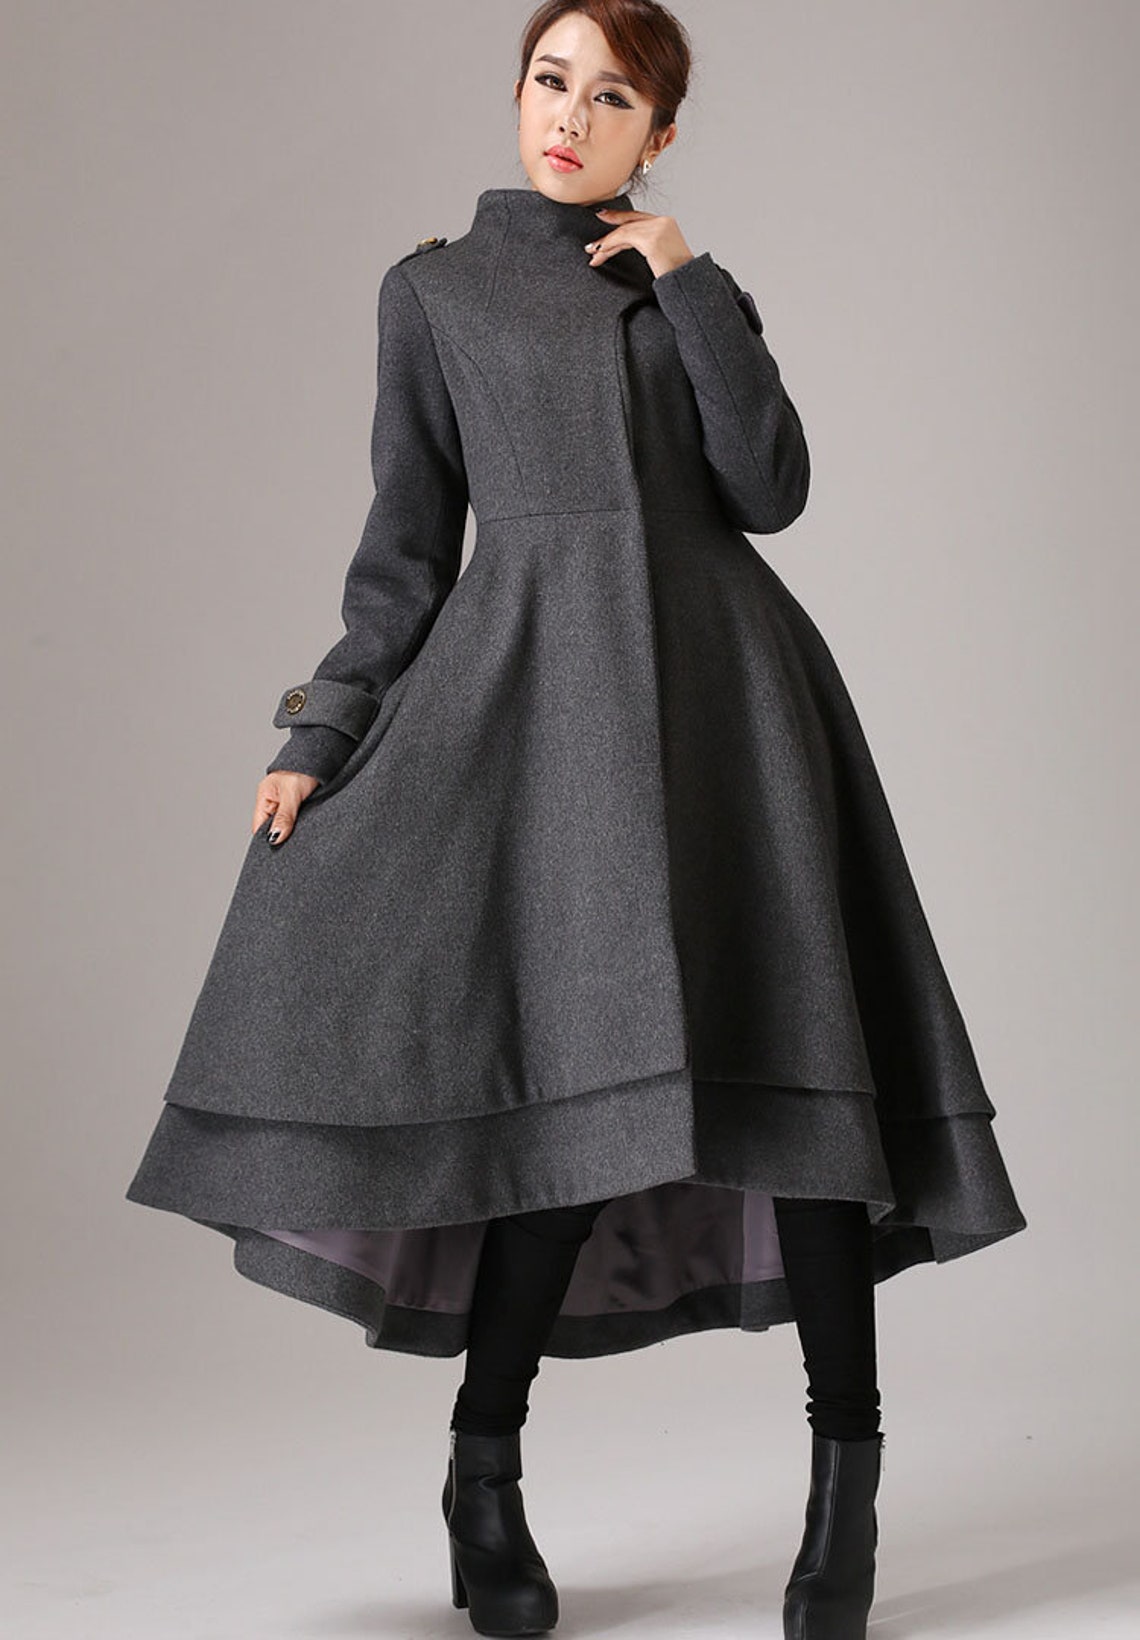 Gray wool coats Long wool coat women winter coat wool coat | Etsy